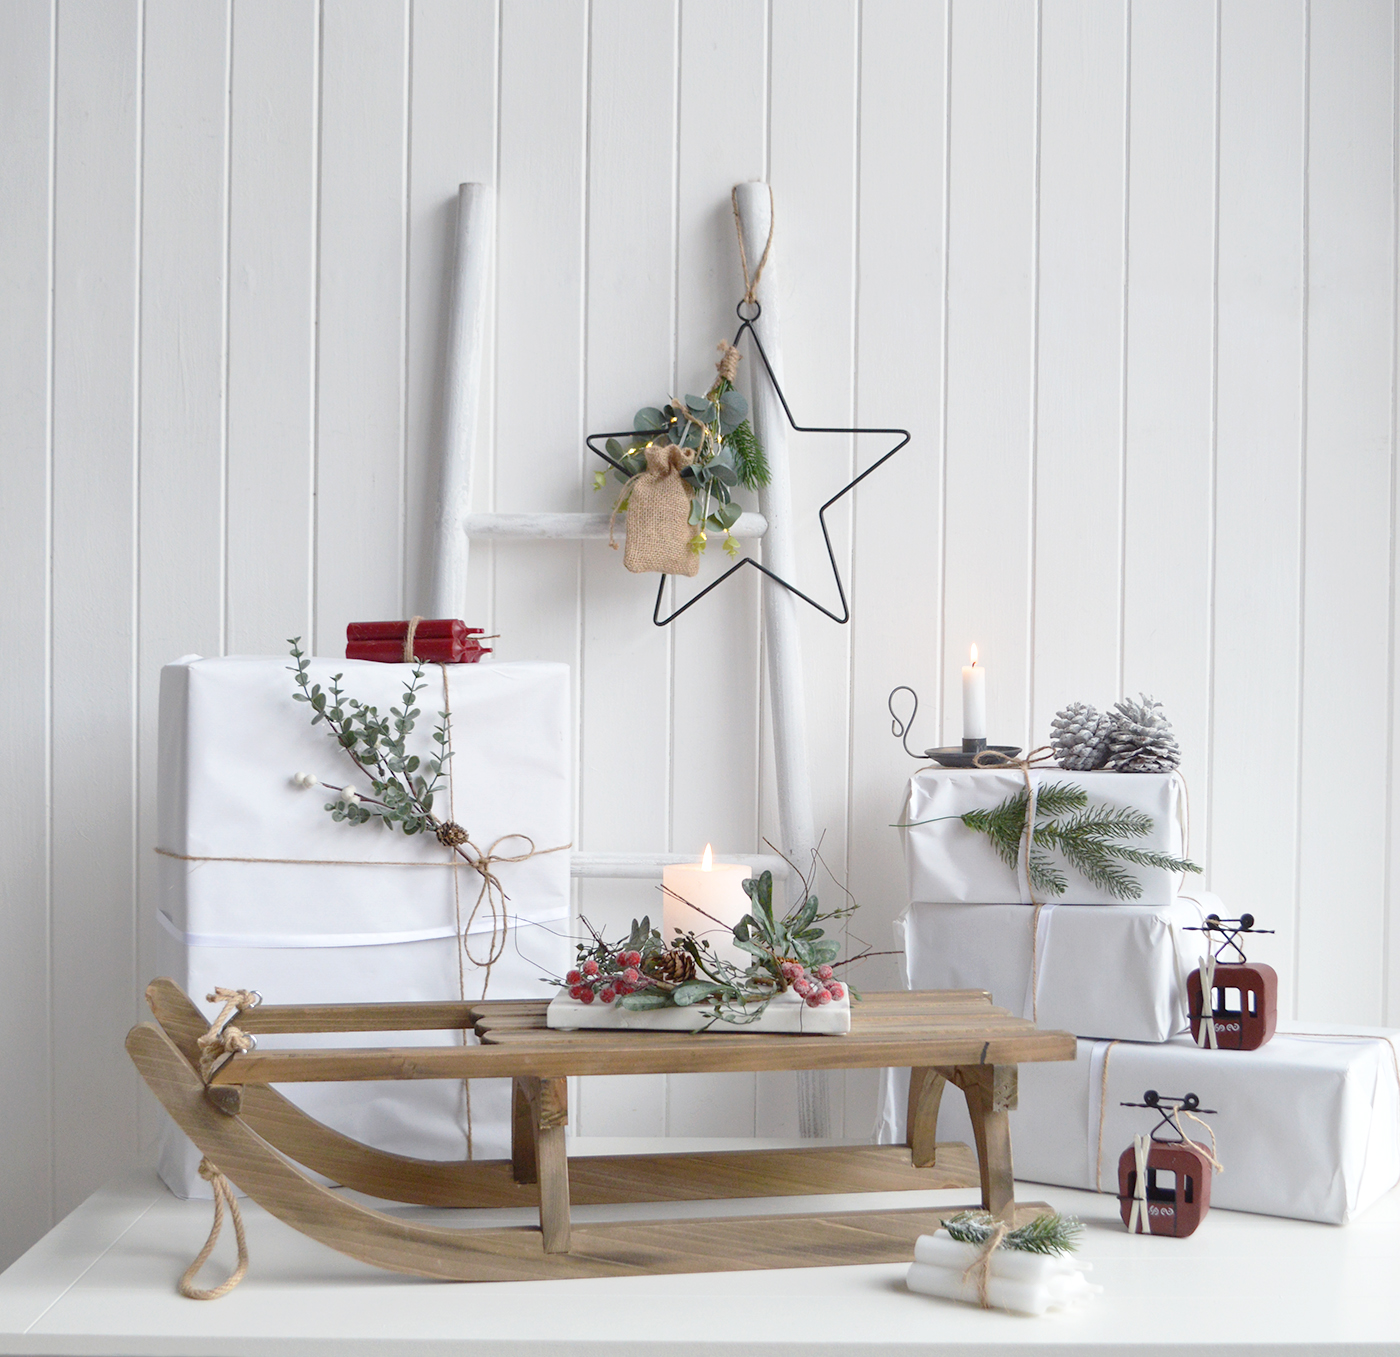 Wooden sleigh for elegant timeless Christmas Decorarions